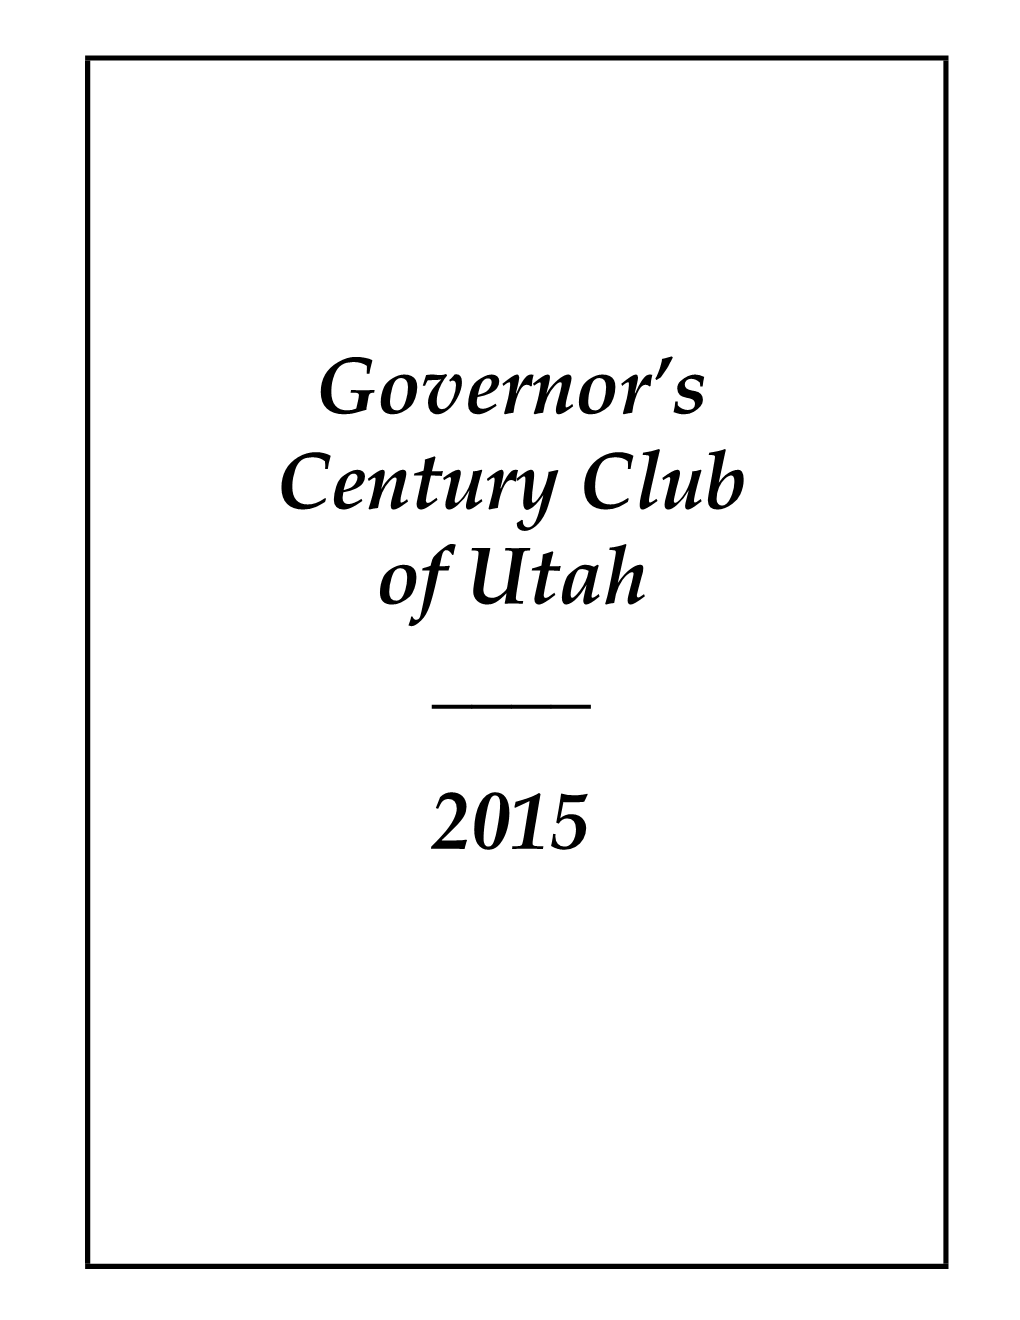 Governor's Century Club of Utah